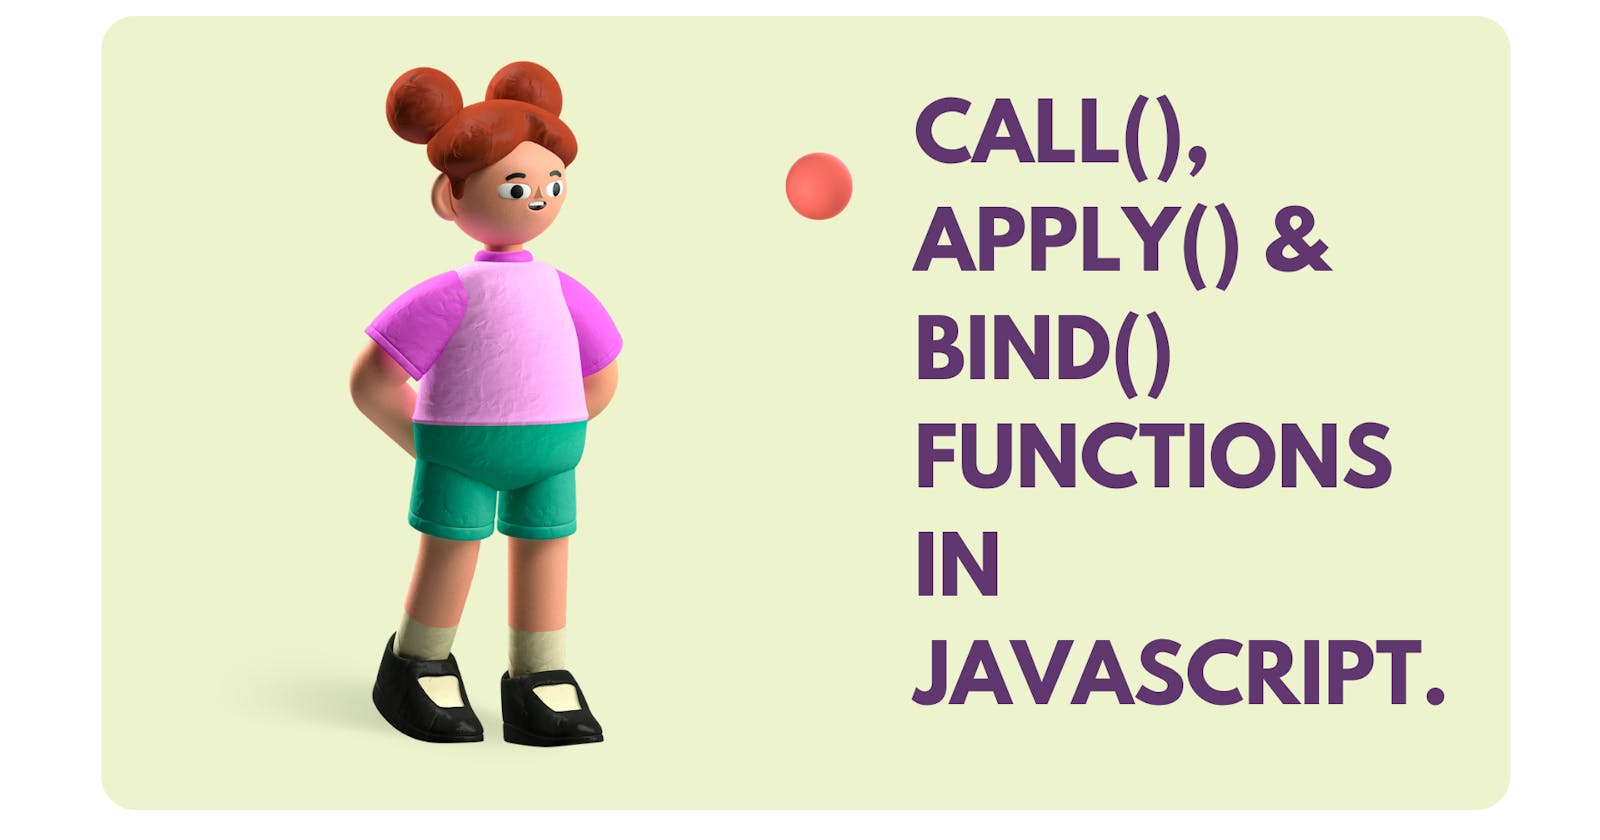 Call(), Apply() & Bind() functions in Javascript.